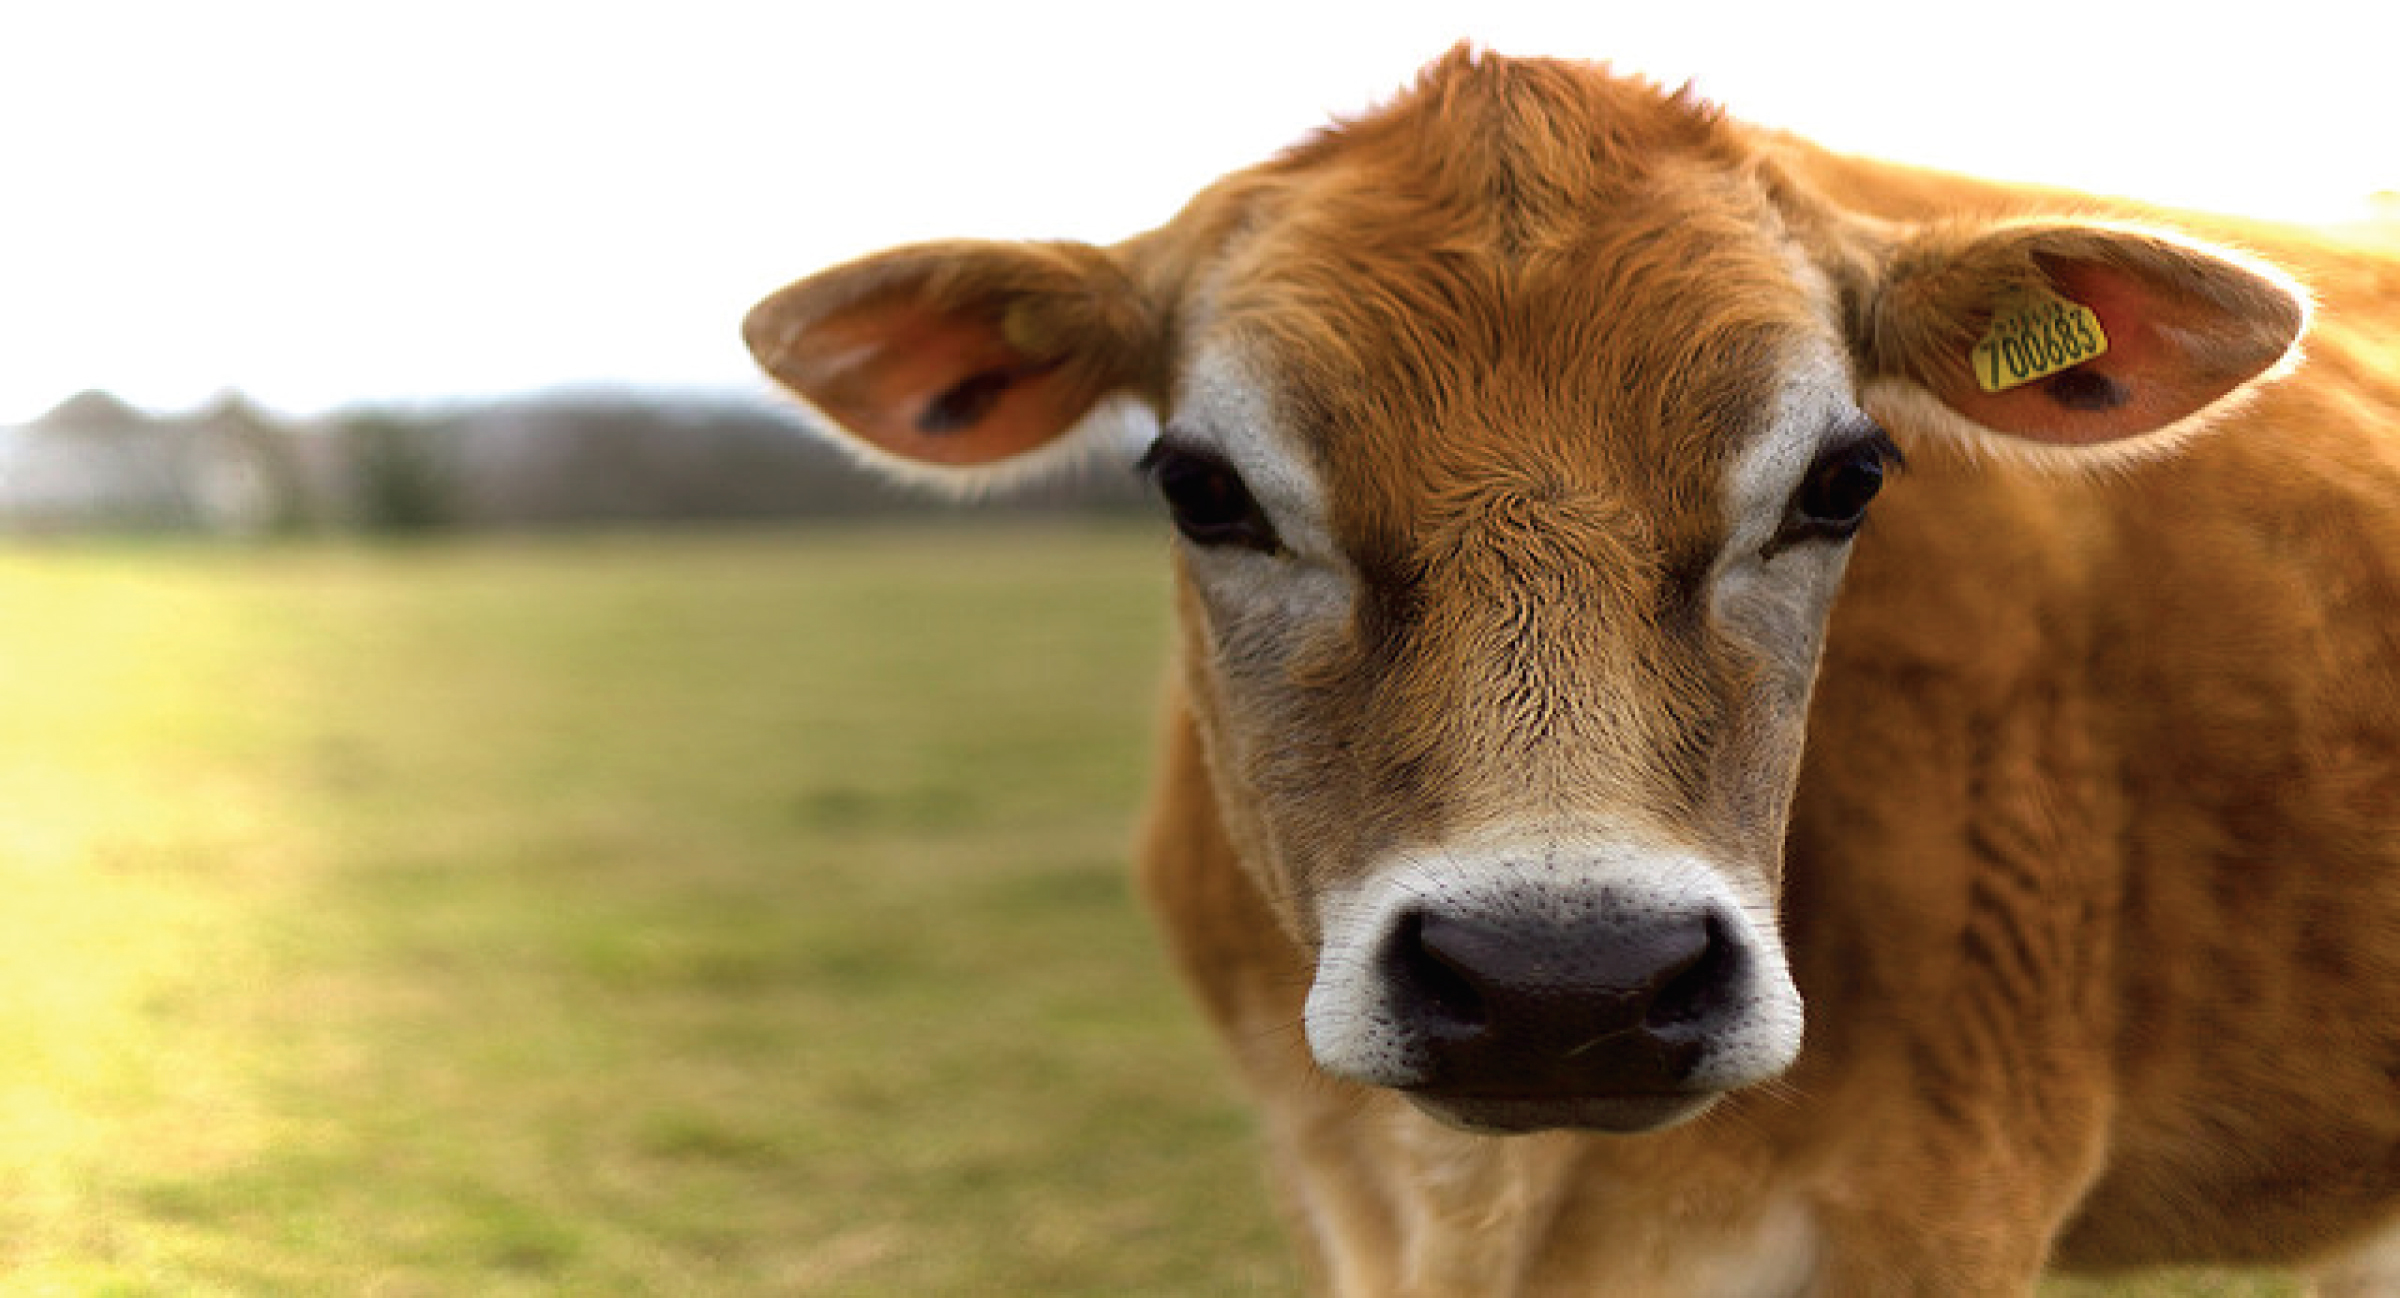 Lowline Cow Image